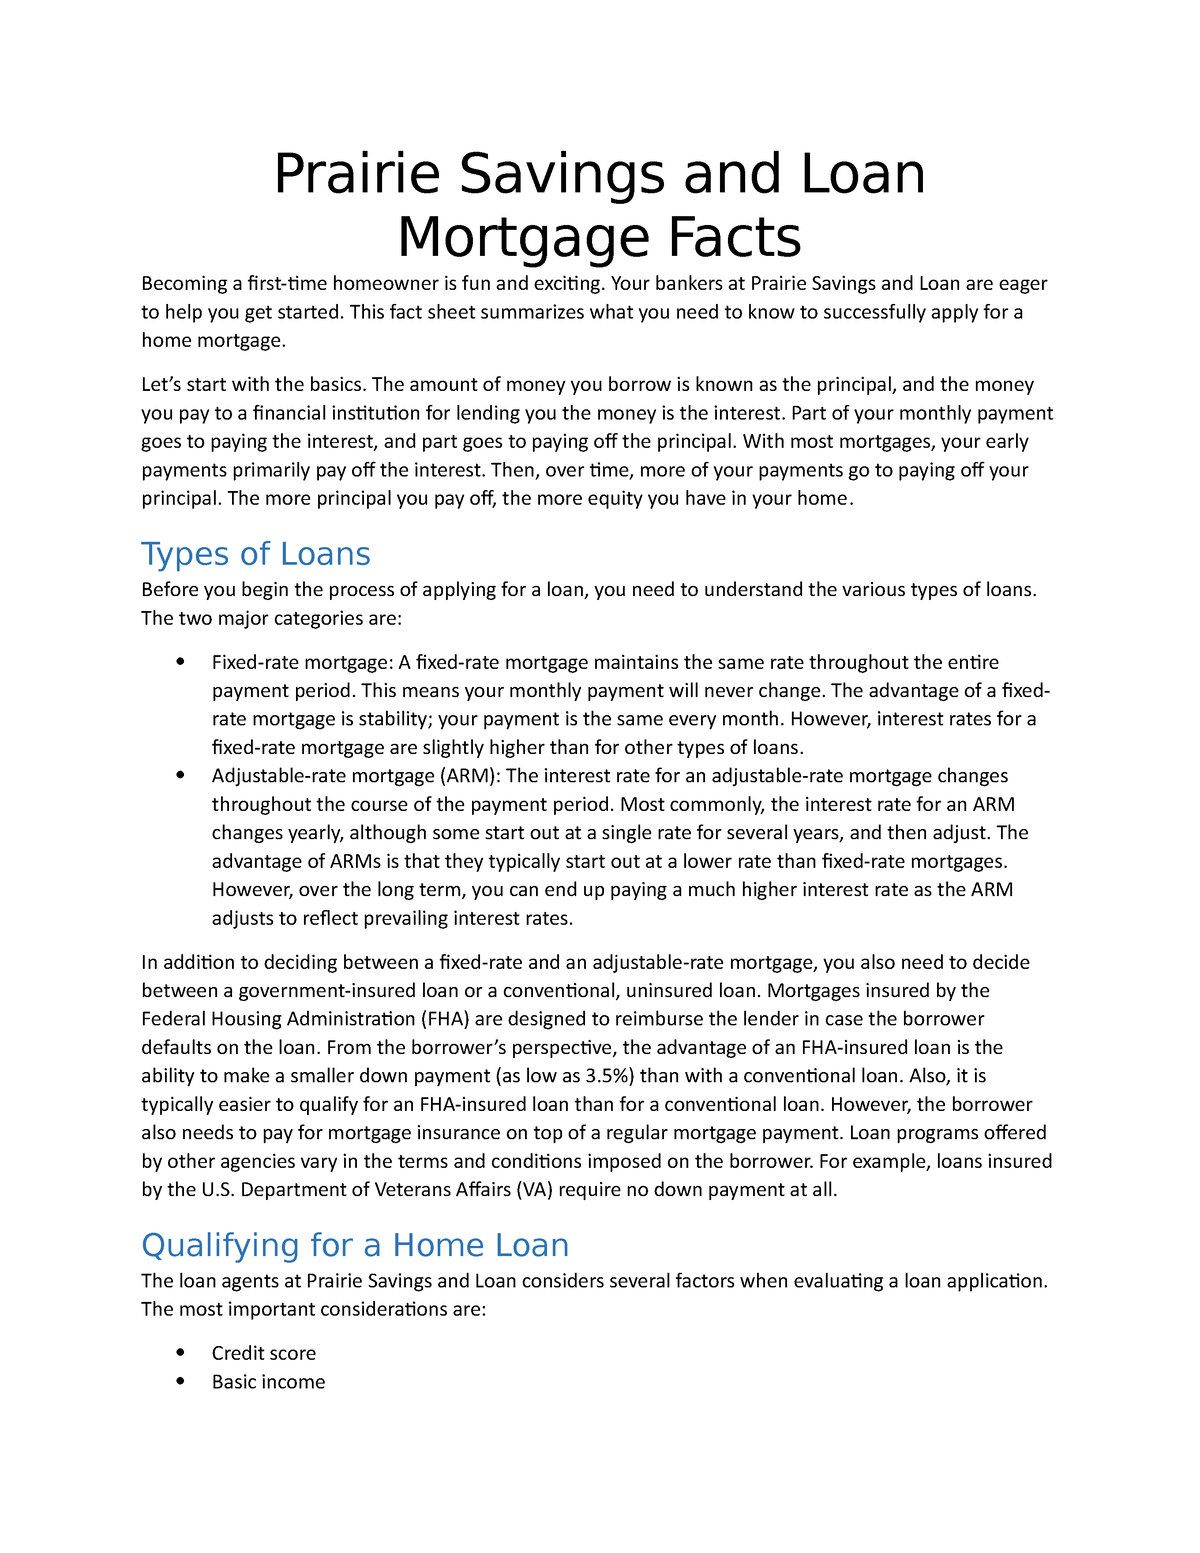 NP WD 2 Mortgage Omer Khadim Prairie Savings and Loan Mortgage Facts